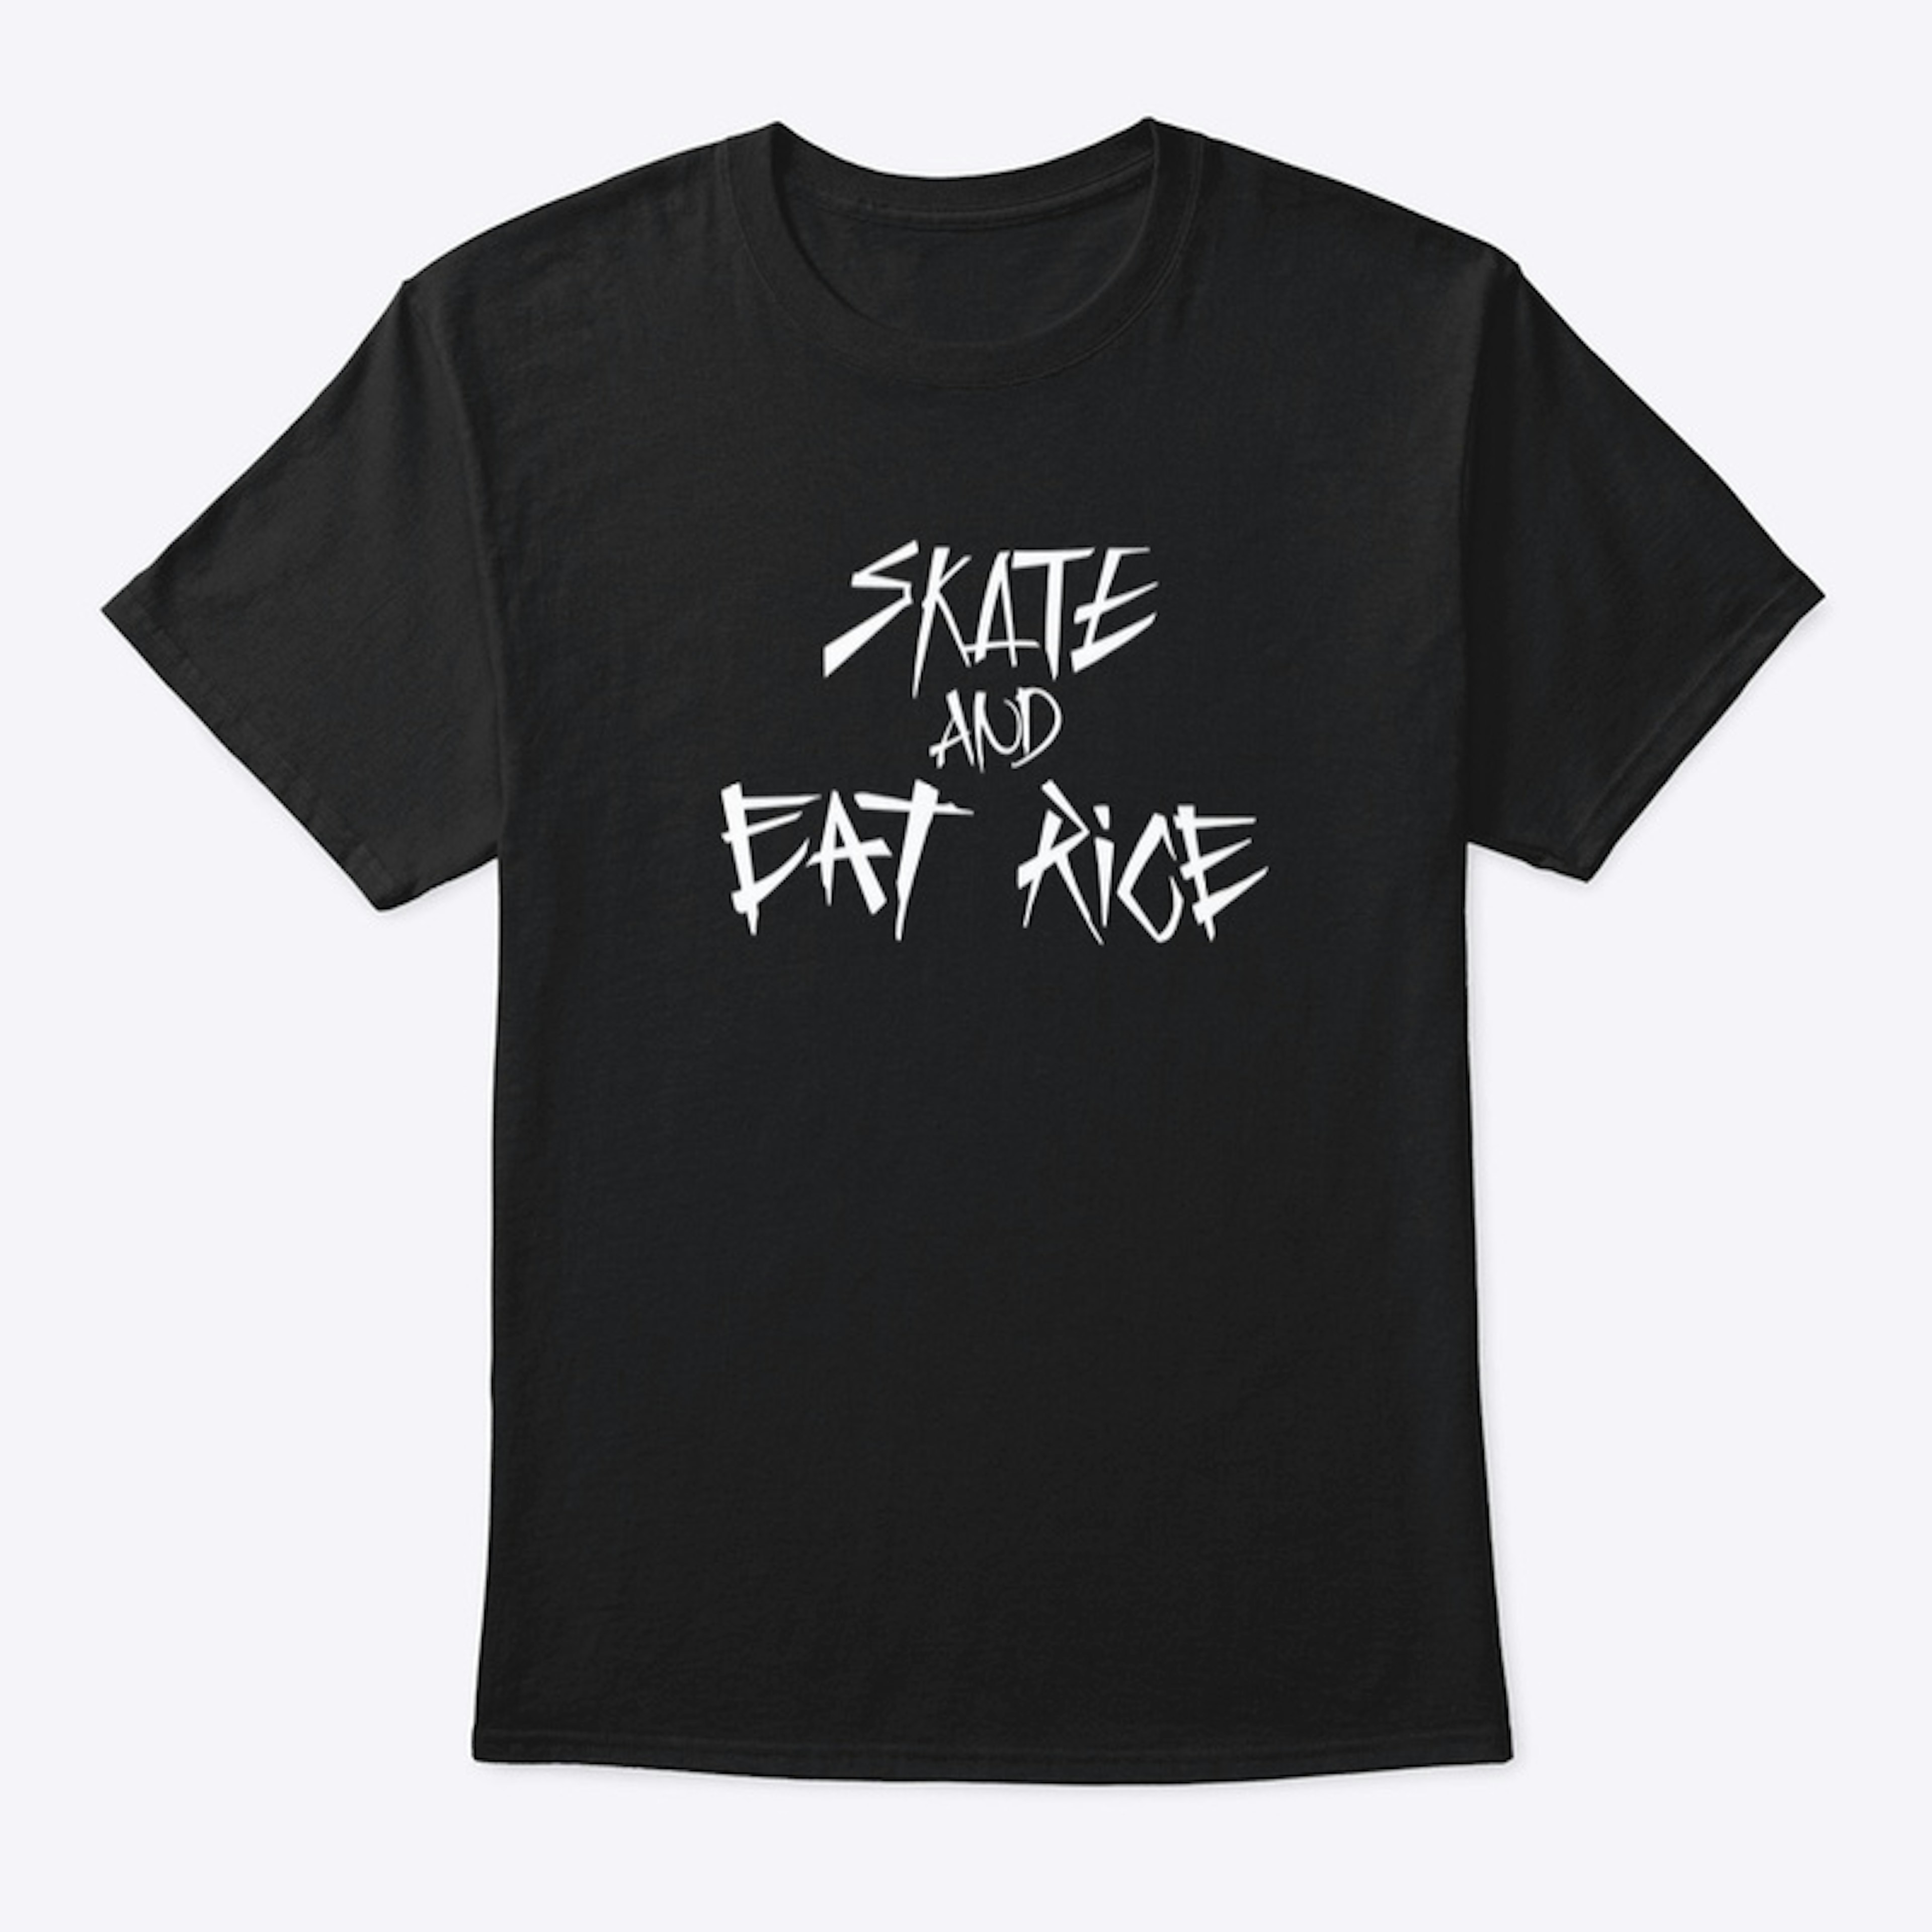 Skate and eat rice LOGO BLACK TSHIRT